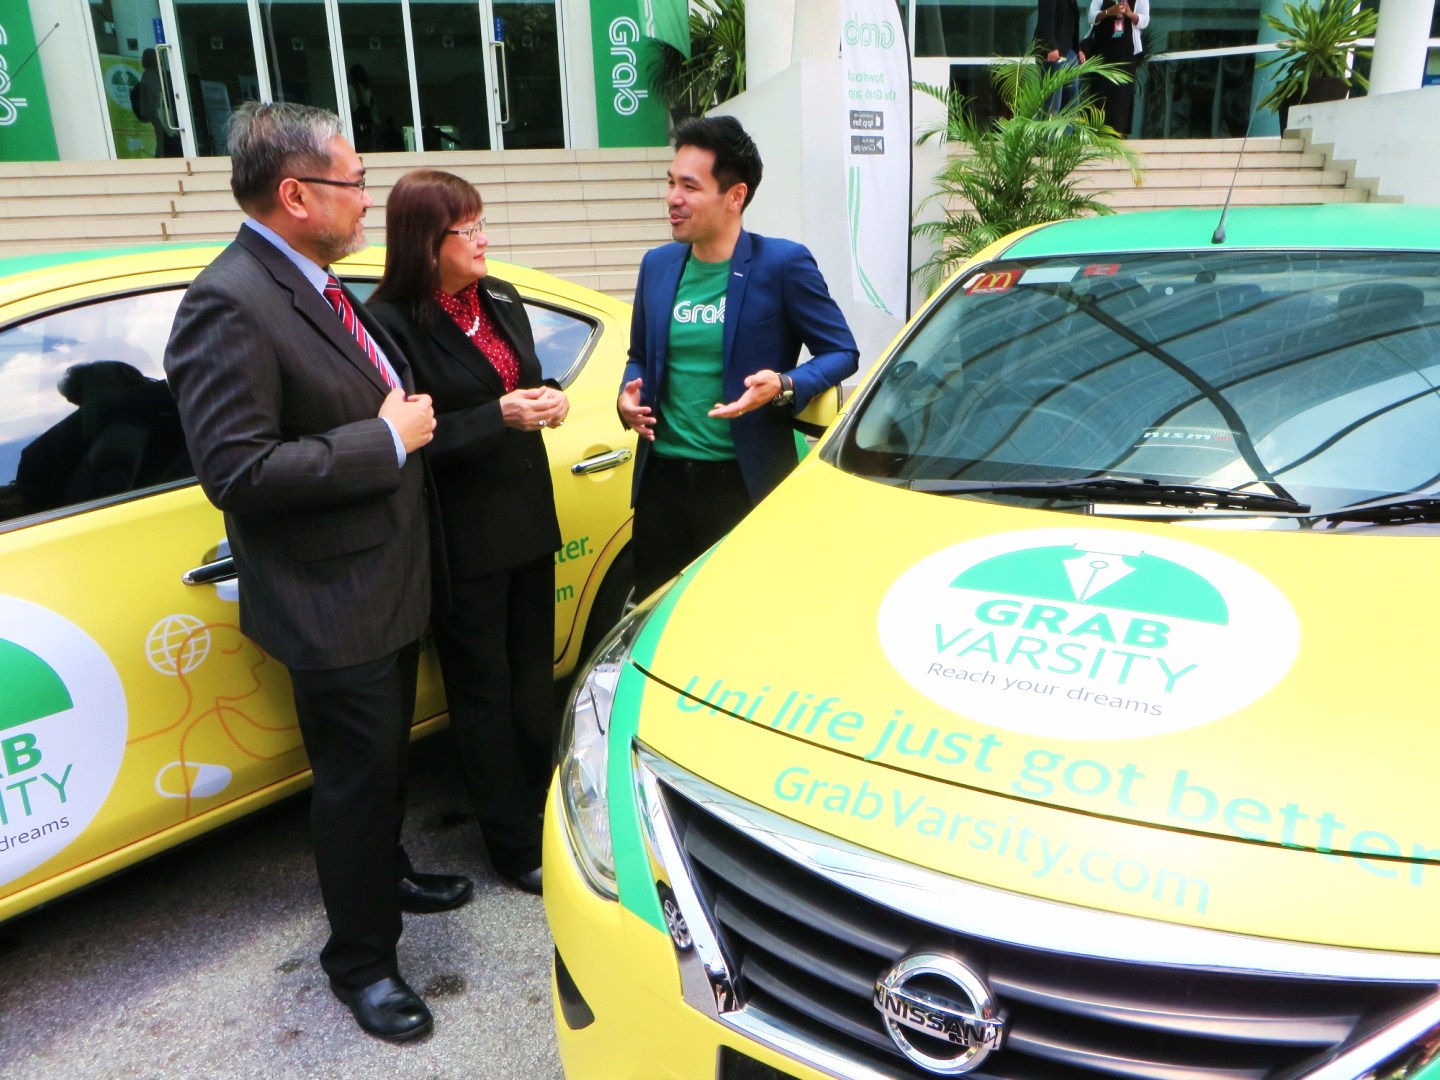 Motoring-Malaysia: Grab Malaysia Launches GrabVarsity - Providing ...